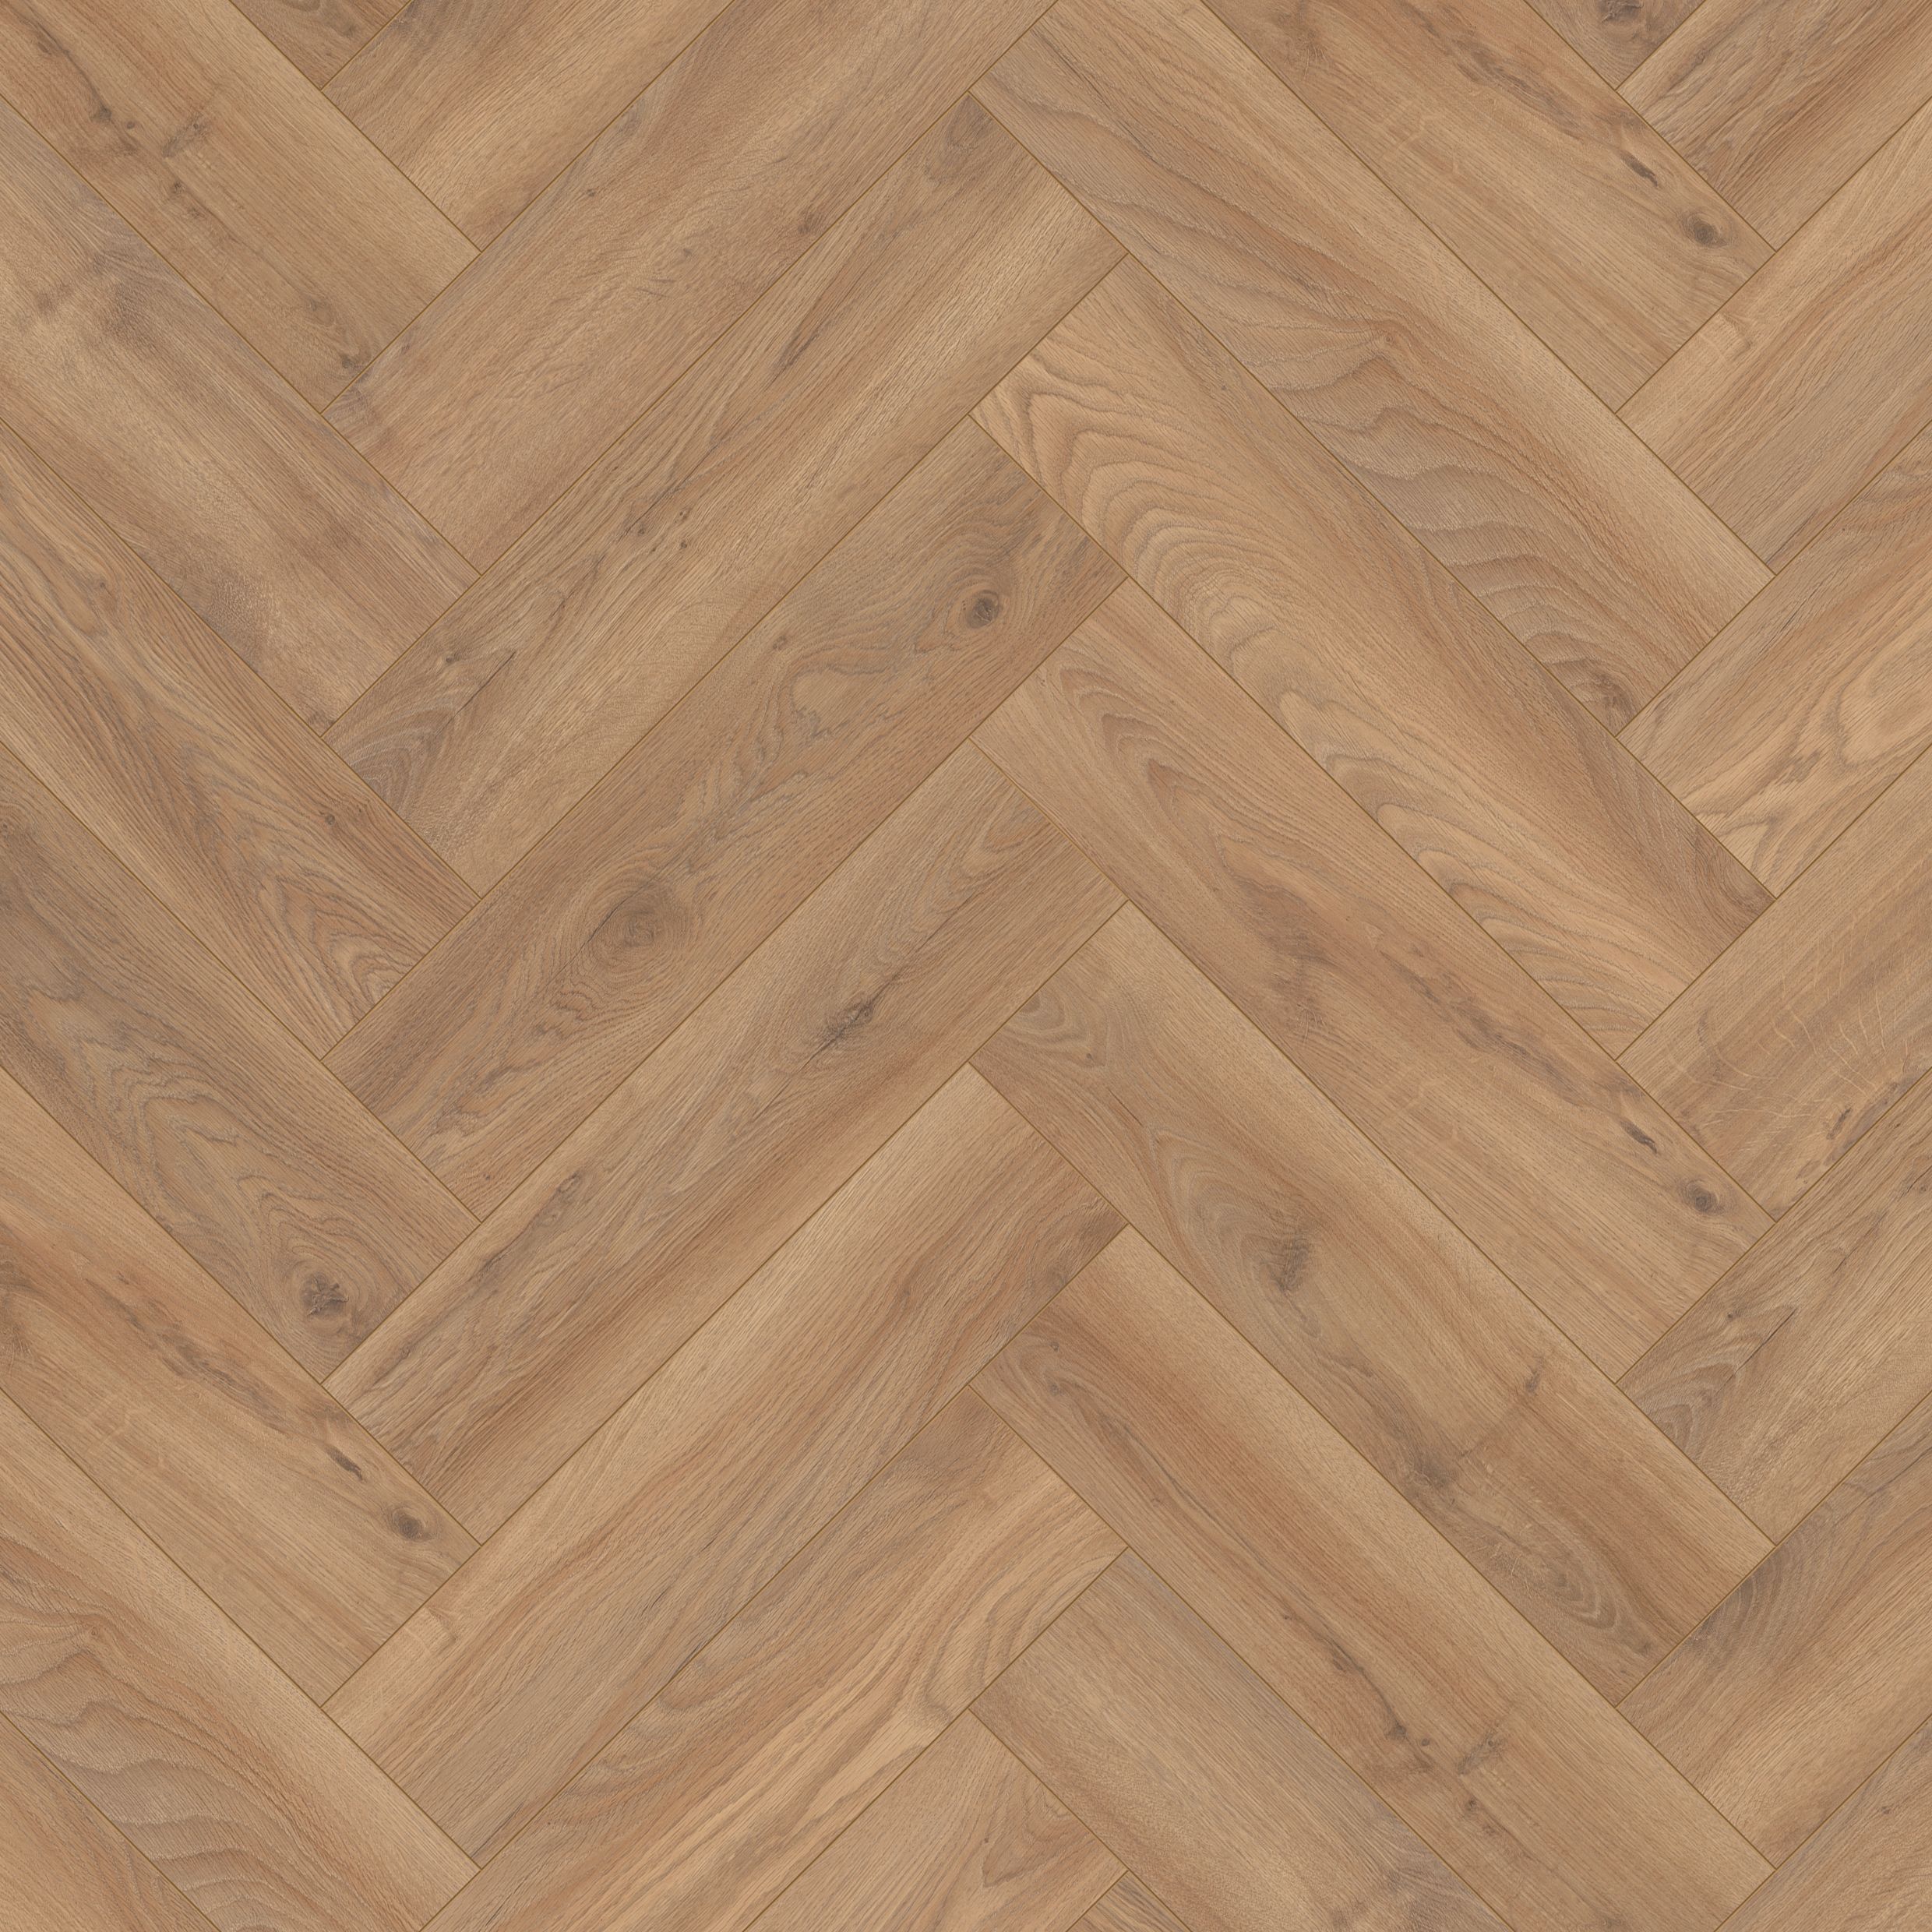 GoodHome Chesterfield Light Natural Herringbone Oak effect Laminate Flooring, 0.87m²